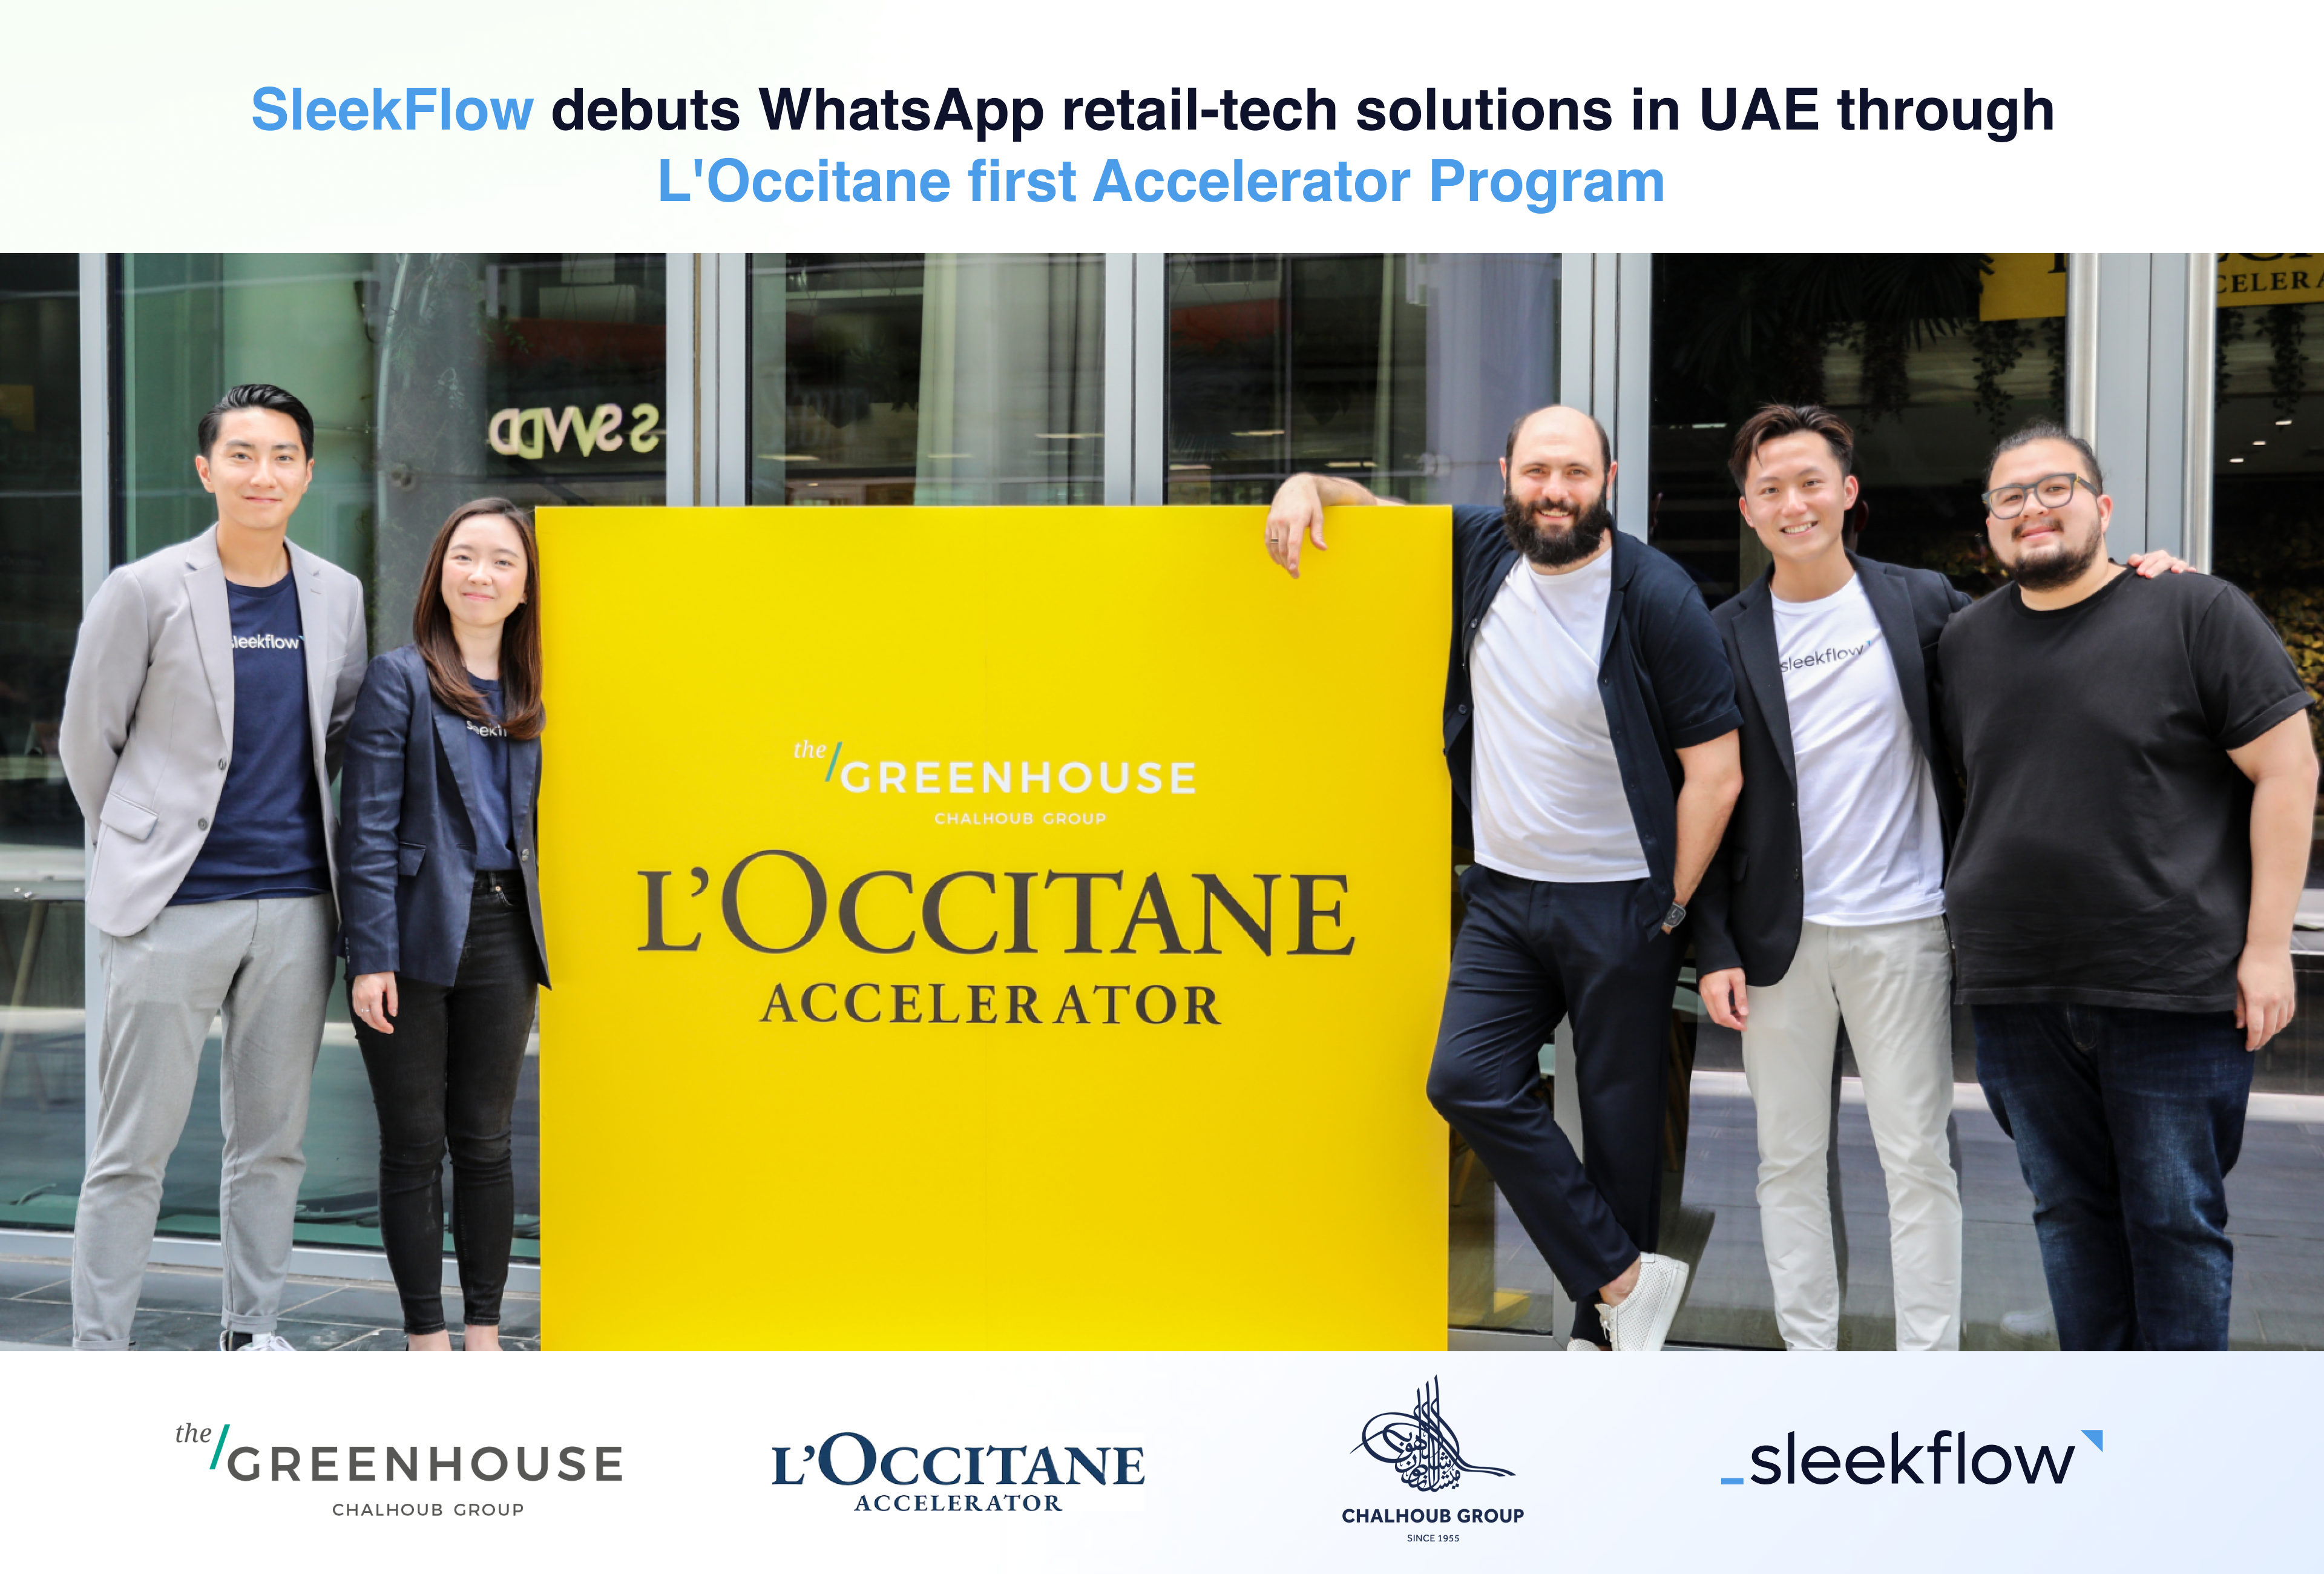 SleekFlow Revolutionizes Retail-Tech Solutions in UAE with WhatsApp Integration